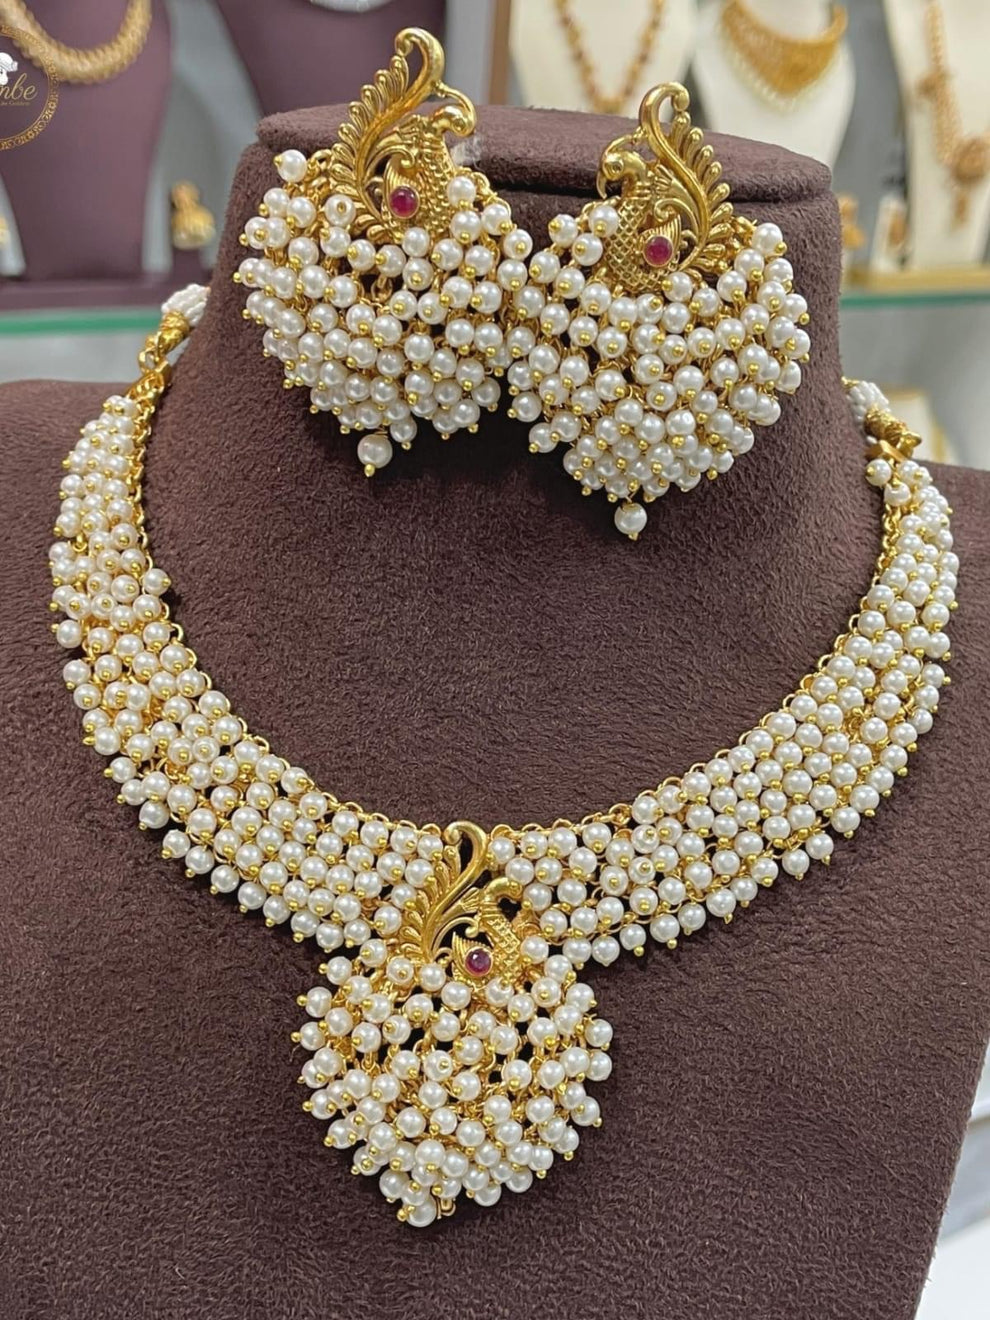 Cluster bead necklace-premium brassgold Aksha Trends 